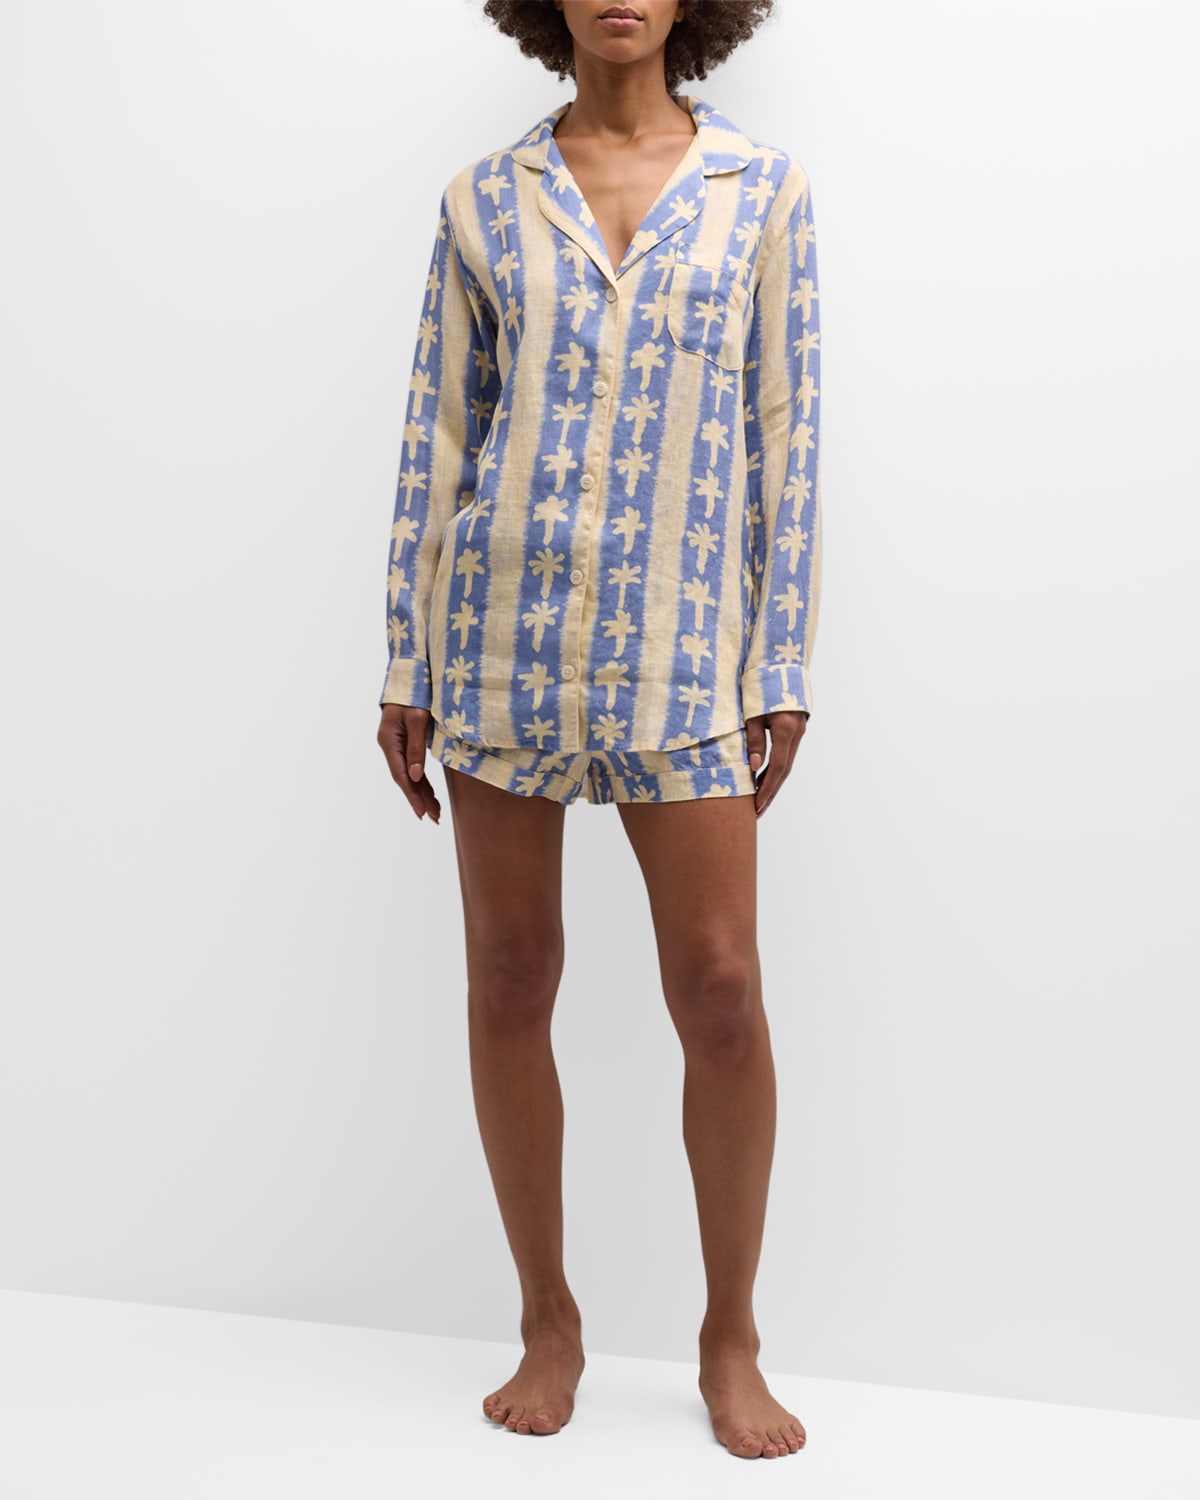 Desmond & Dempsey Striped Palm Tree-Print Cotton Pajama Set